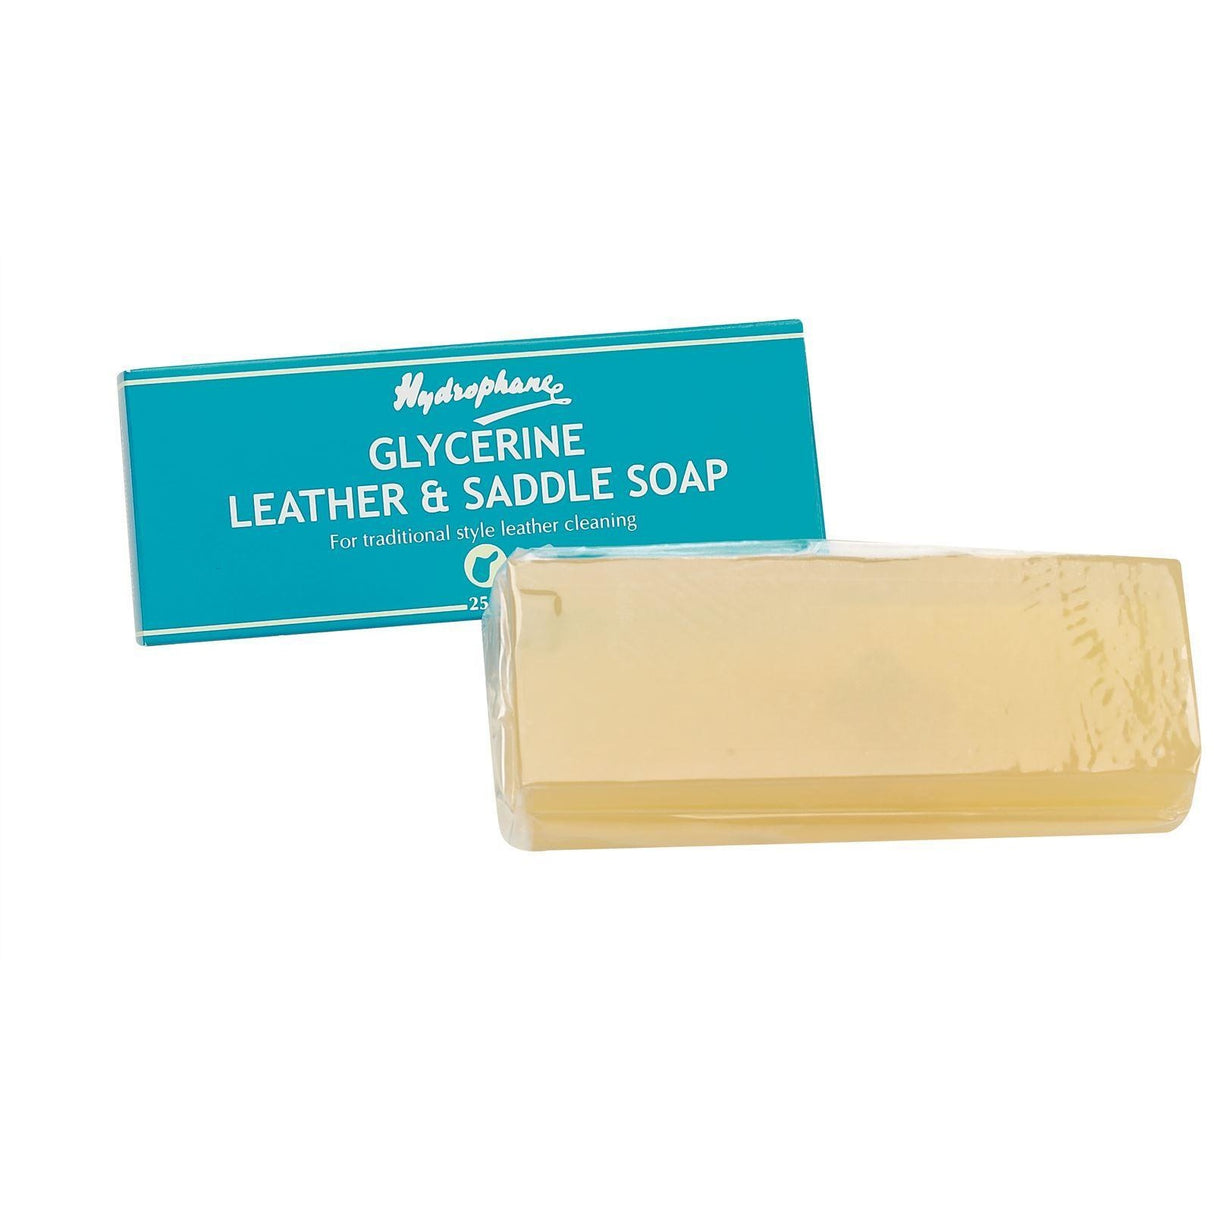 HYDROPHANE Glycerine Leather & Saddle Soap 3832